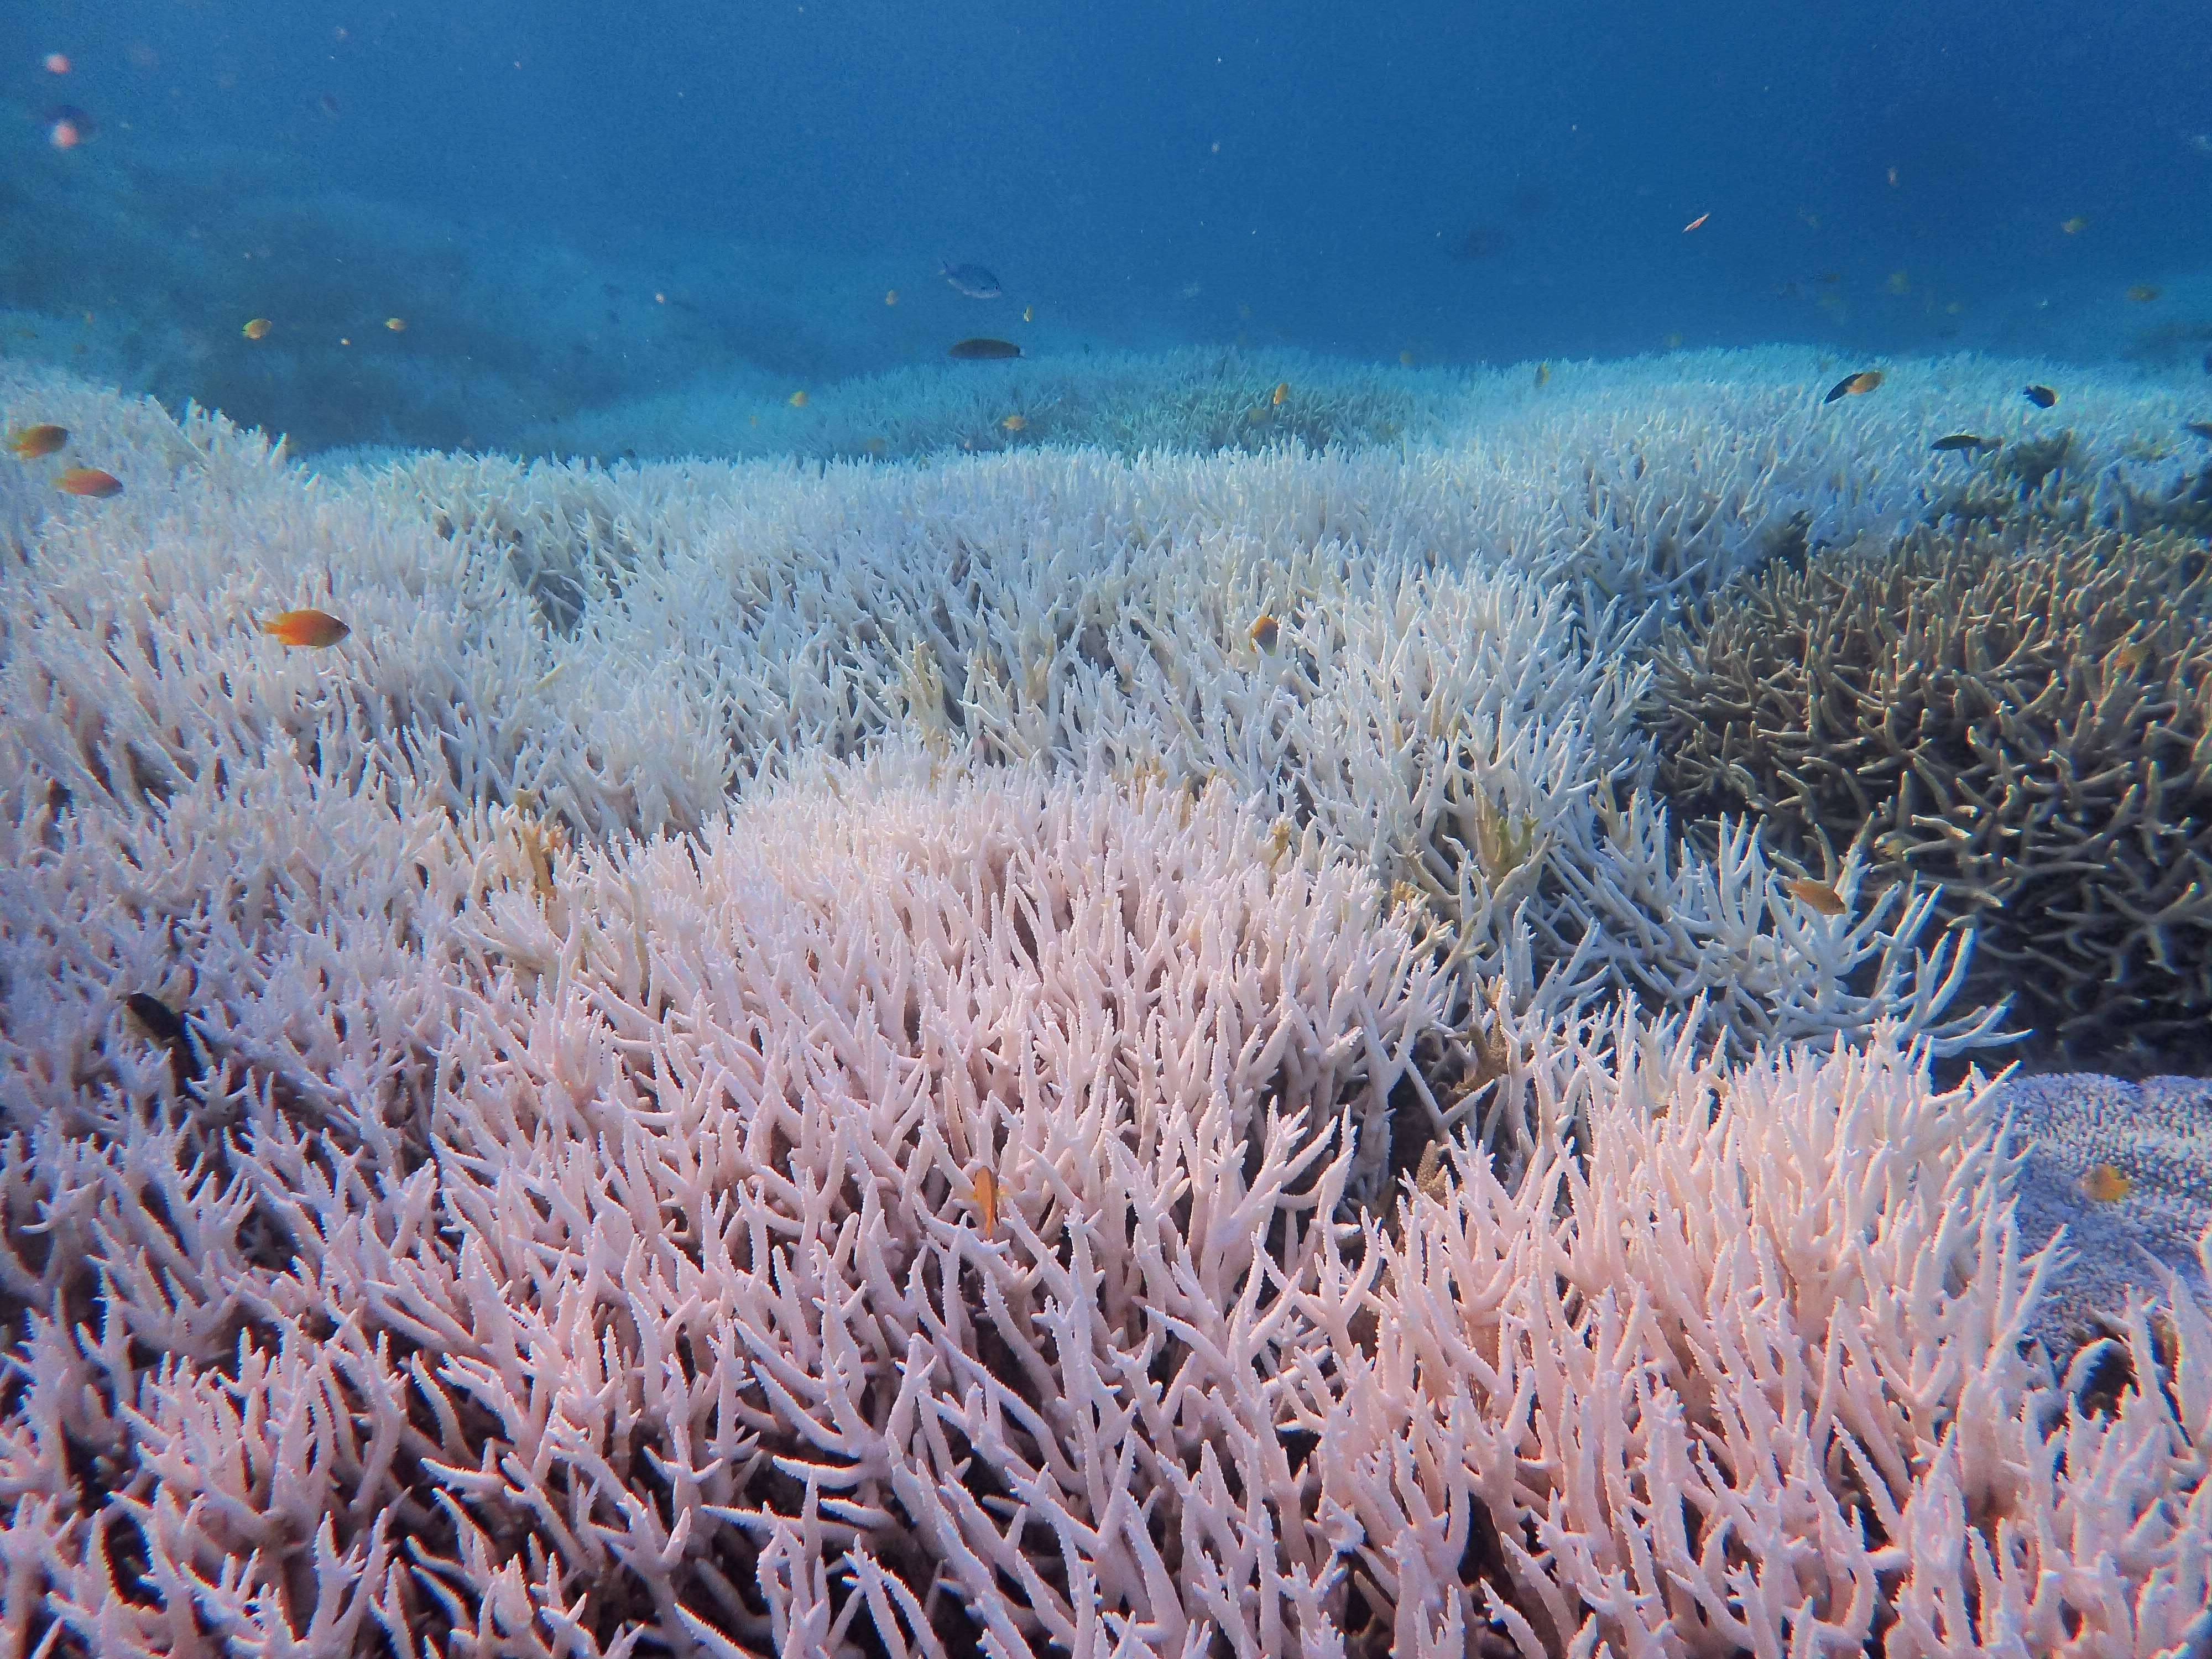 Bleached corals stand near Heron Island off Queensland, Australia. Photo: dpa